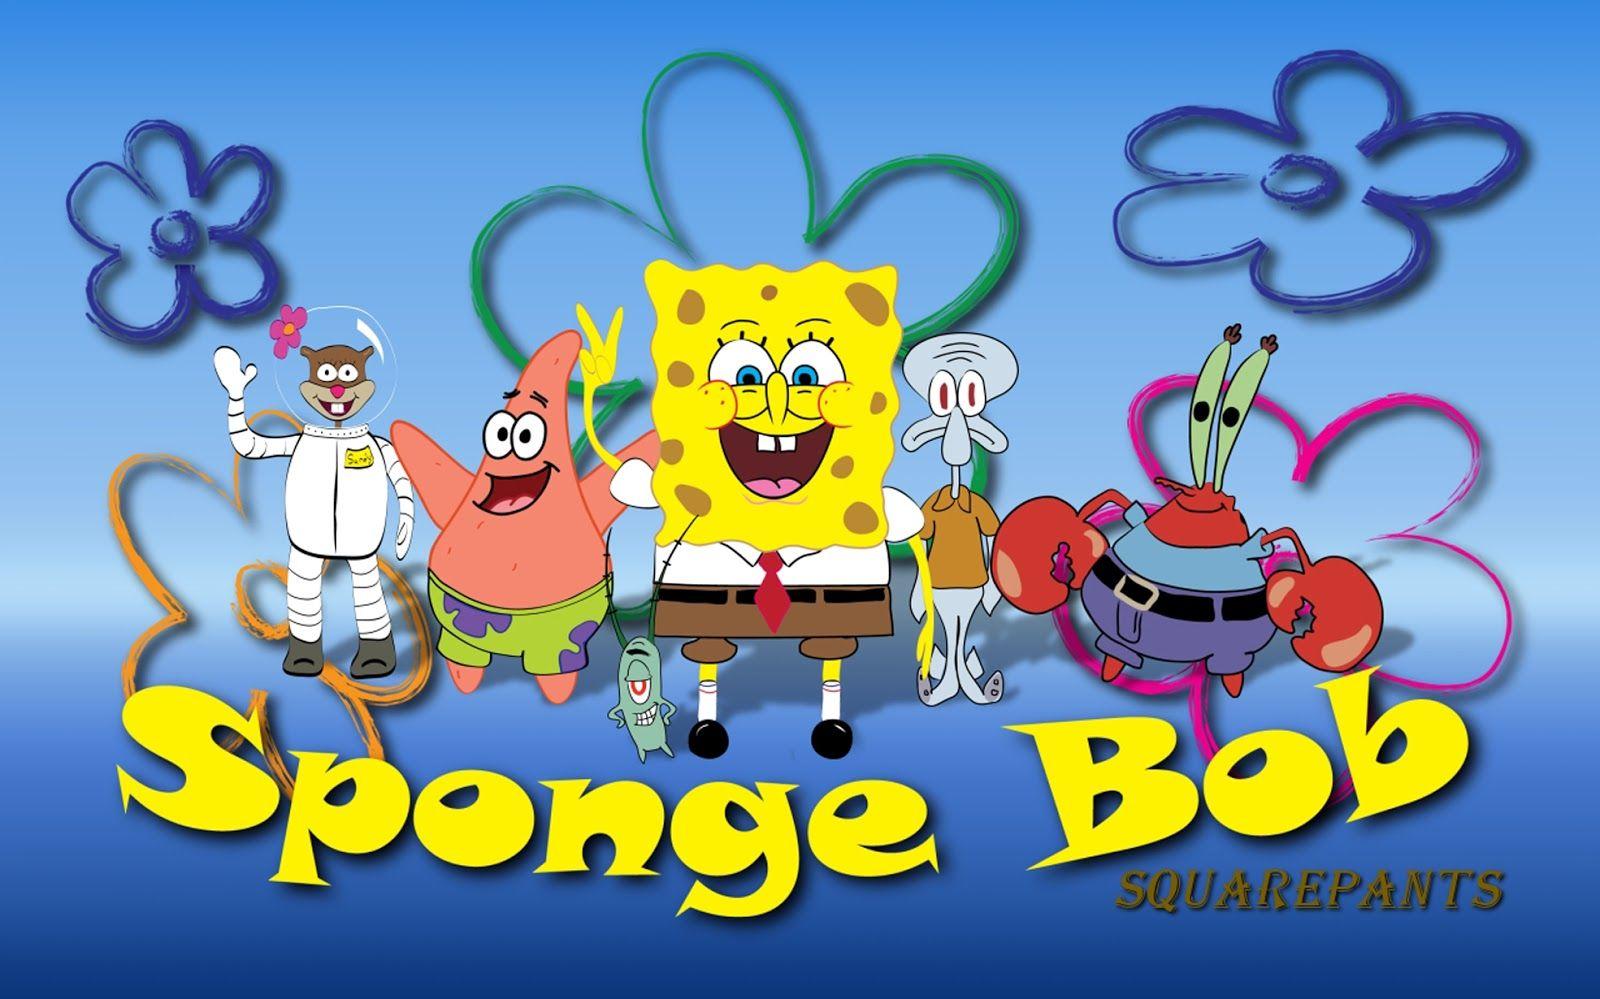 Spongebob Squarepants Wallpaper and Background Image